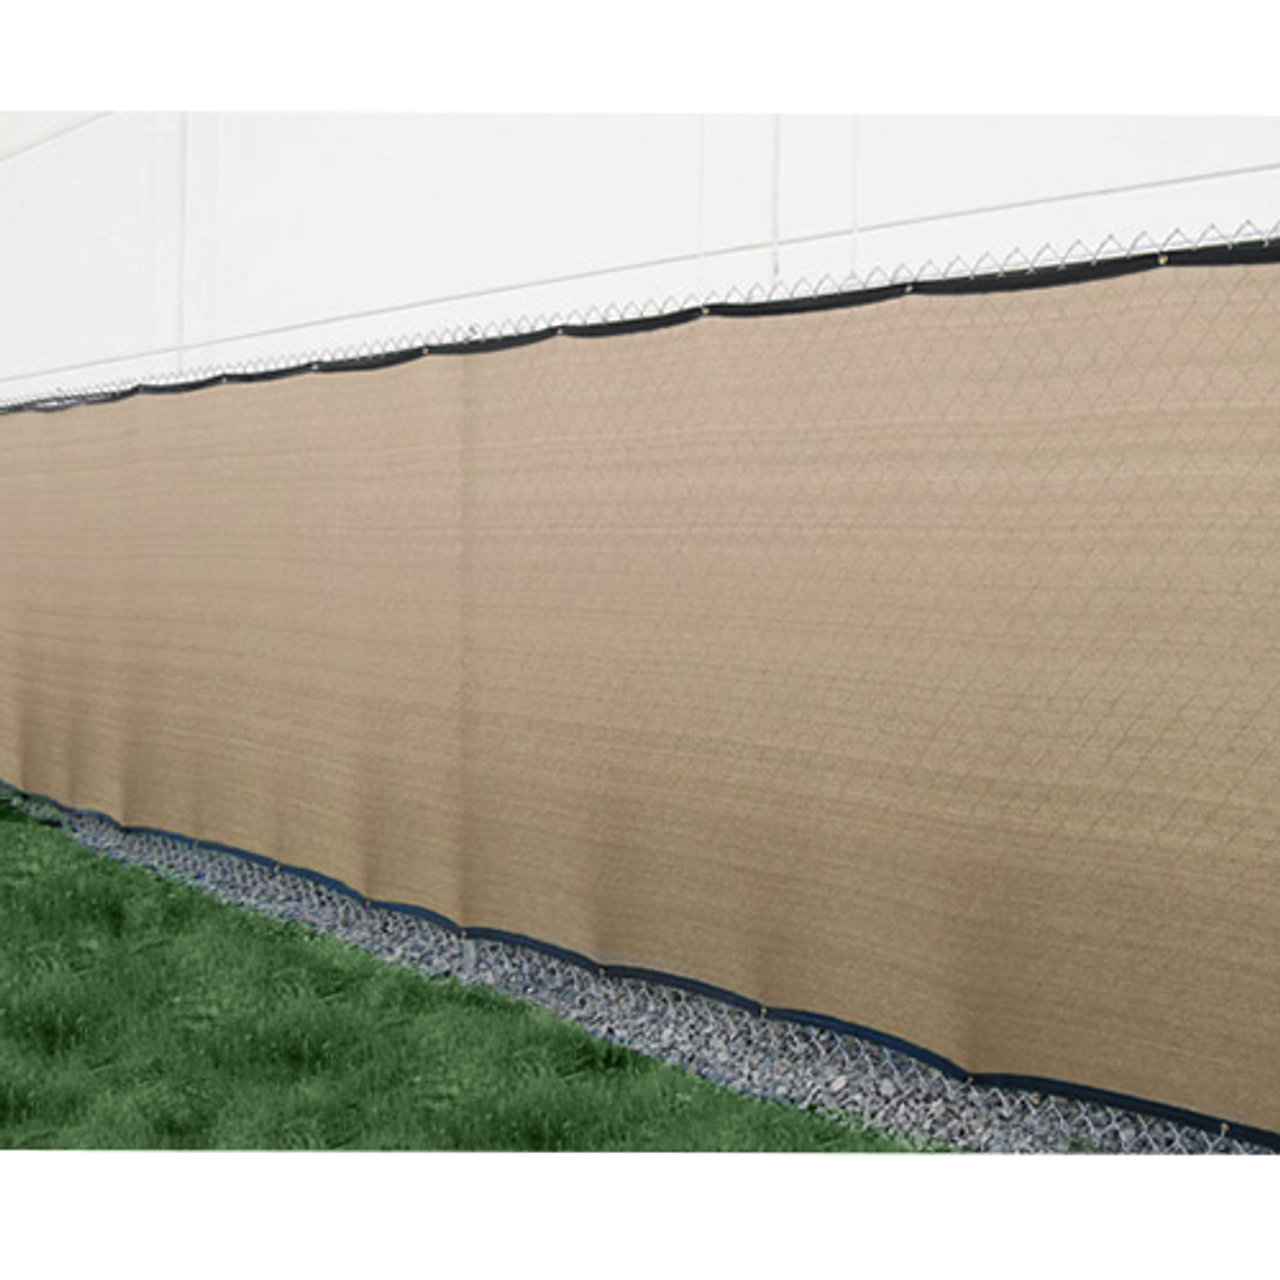 6' X 50' Heavy Duty Tan Fence Screen Mesh Tarp.(Finished Size 5'6" x 49'6")